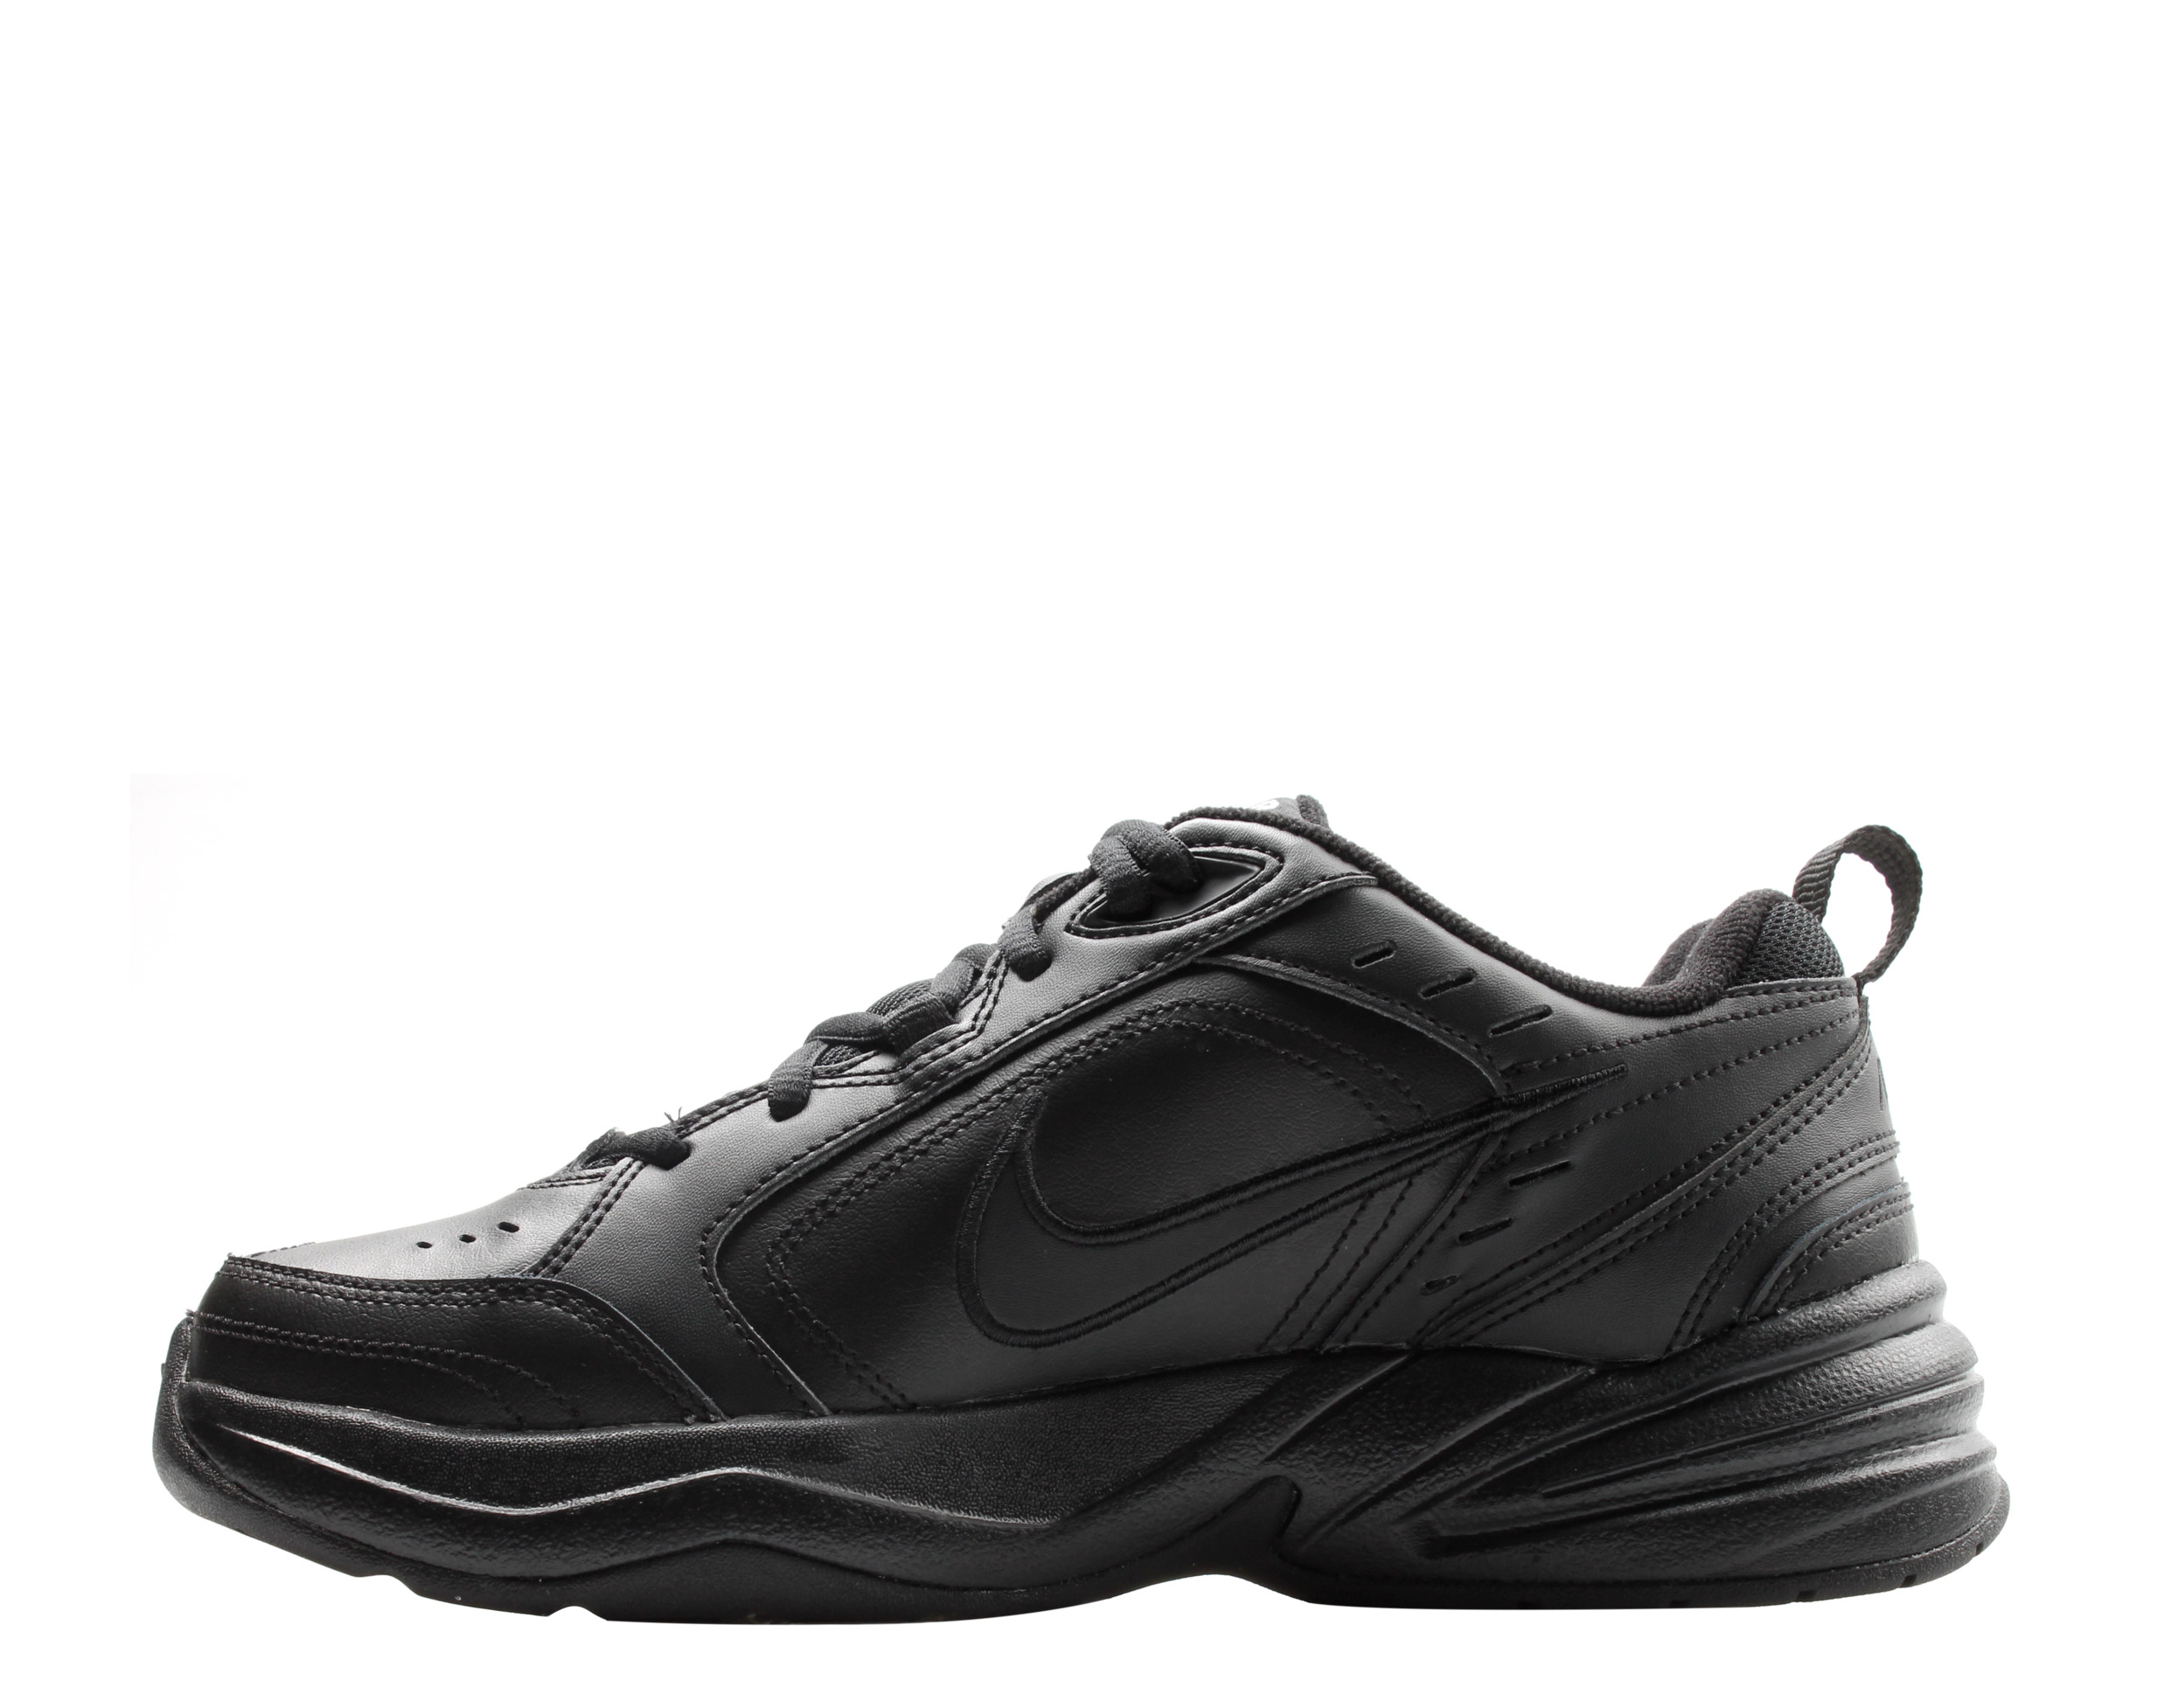 Nike Air Monach IV Men's Cross Training Shoes Size 9M - image 3 of 6